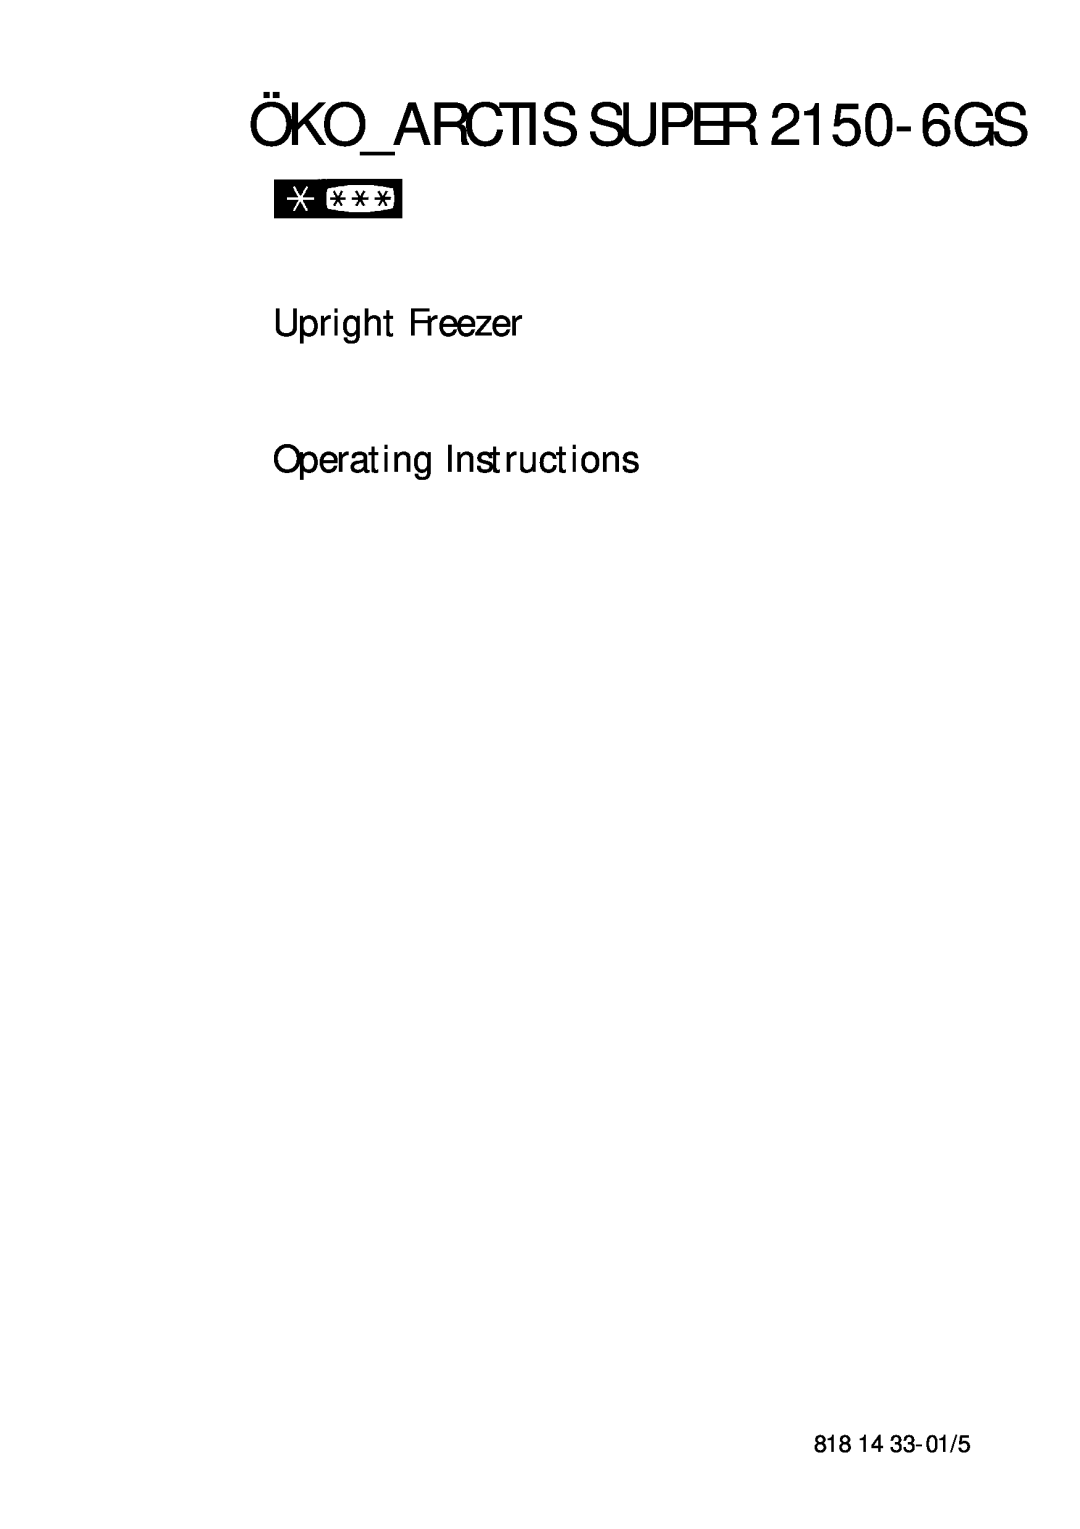 AEG manual ÖKOARCTIS SUPER 2150-6GS, Upright Freezer Operating Instructions 